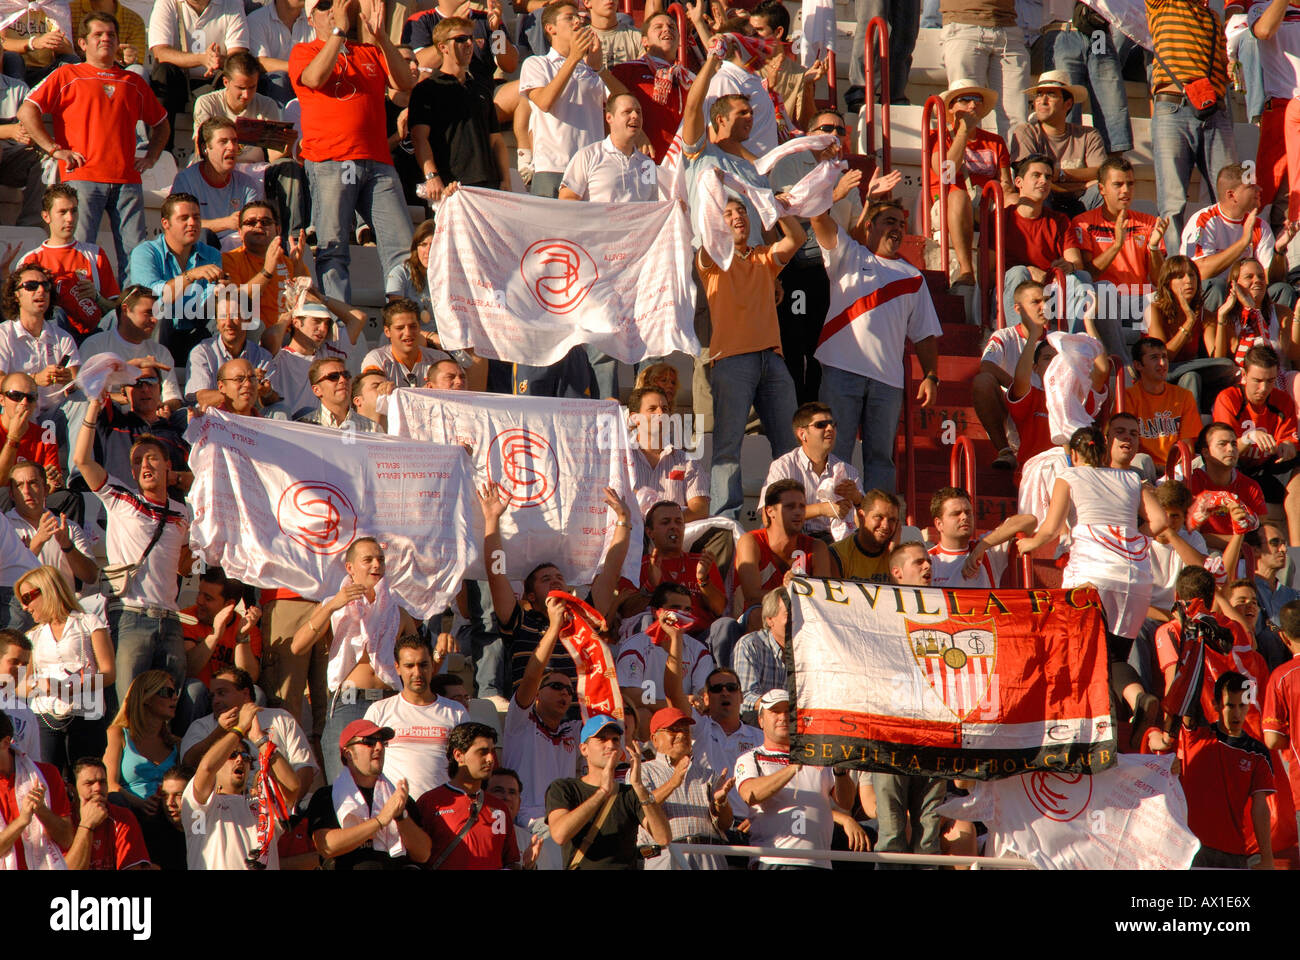 Sevilla FC fans at Ramón Sánchez-Pizjuan stadium, Seville, Andalusia, Spain, Europe Stock Photo